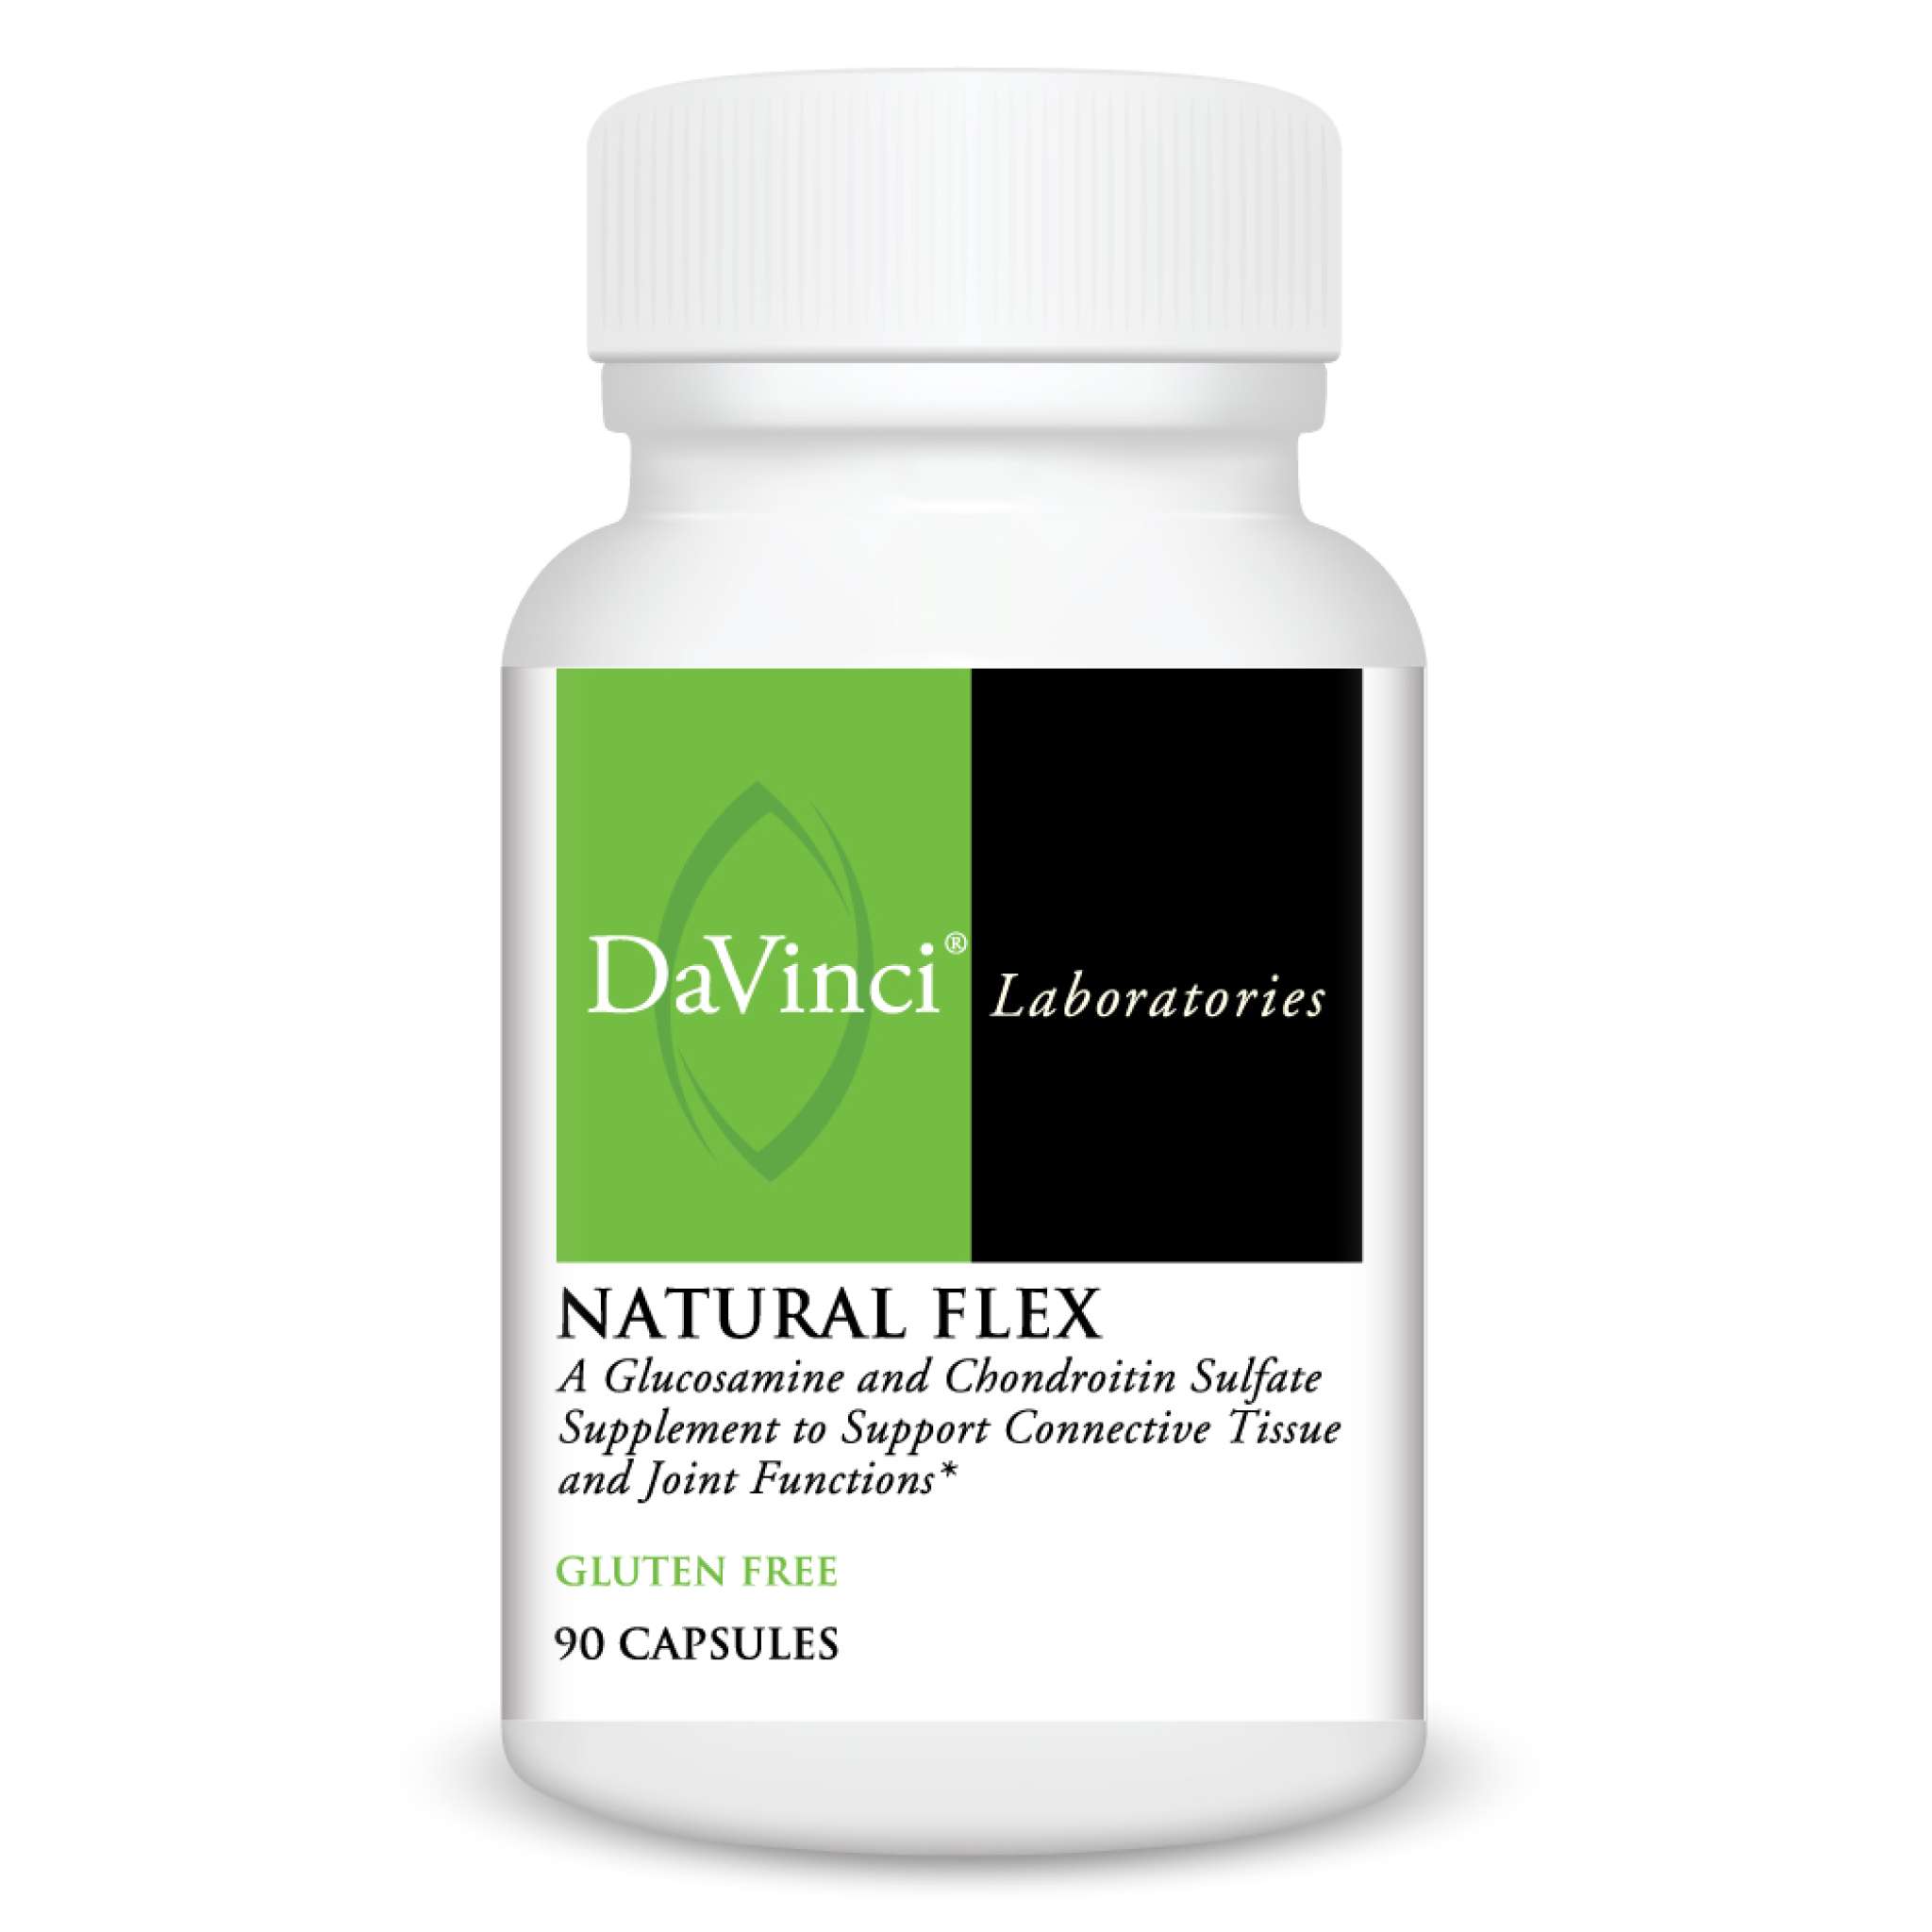 Davinci Laboratories - Natural Flex